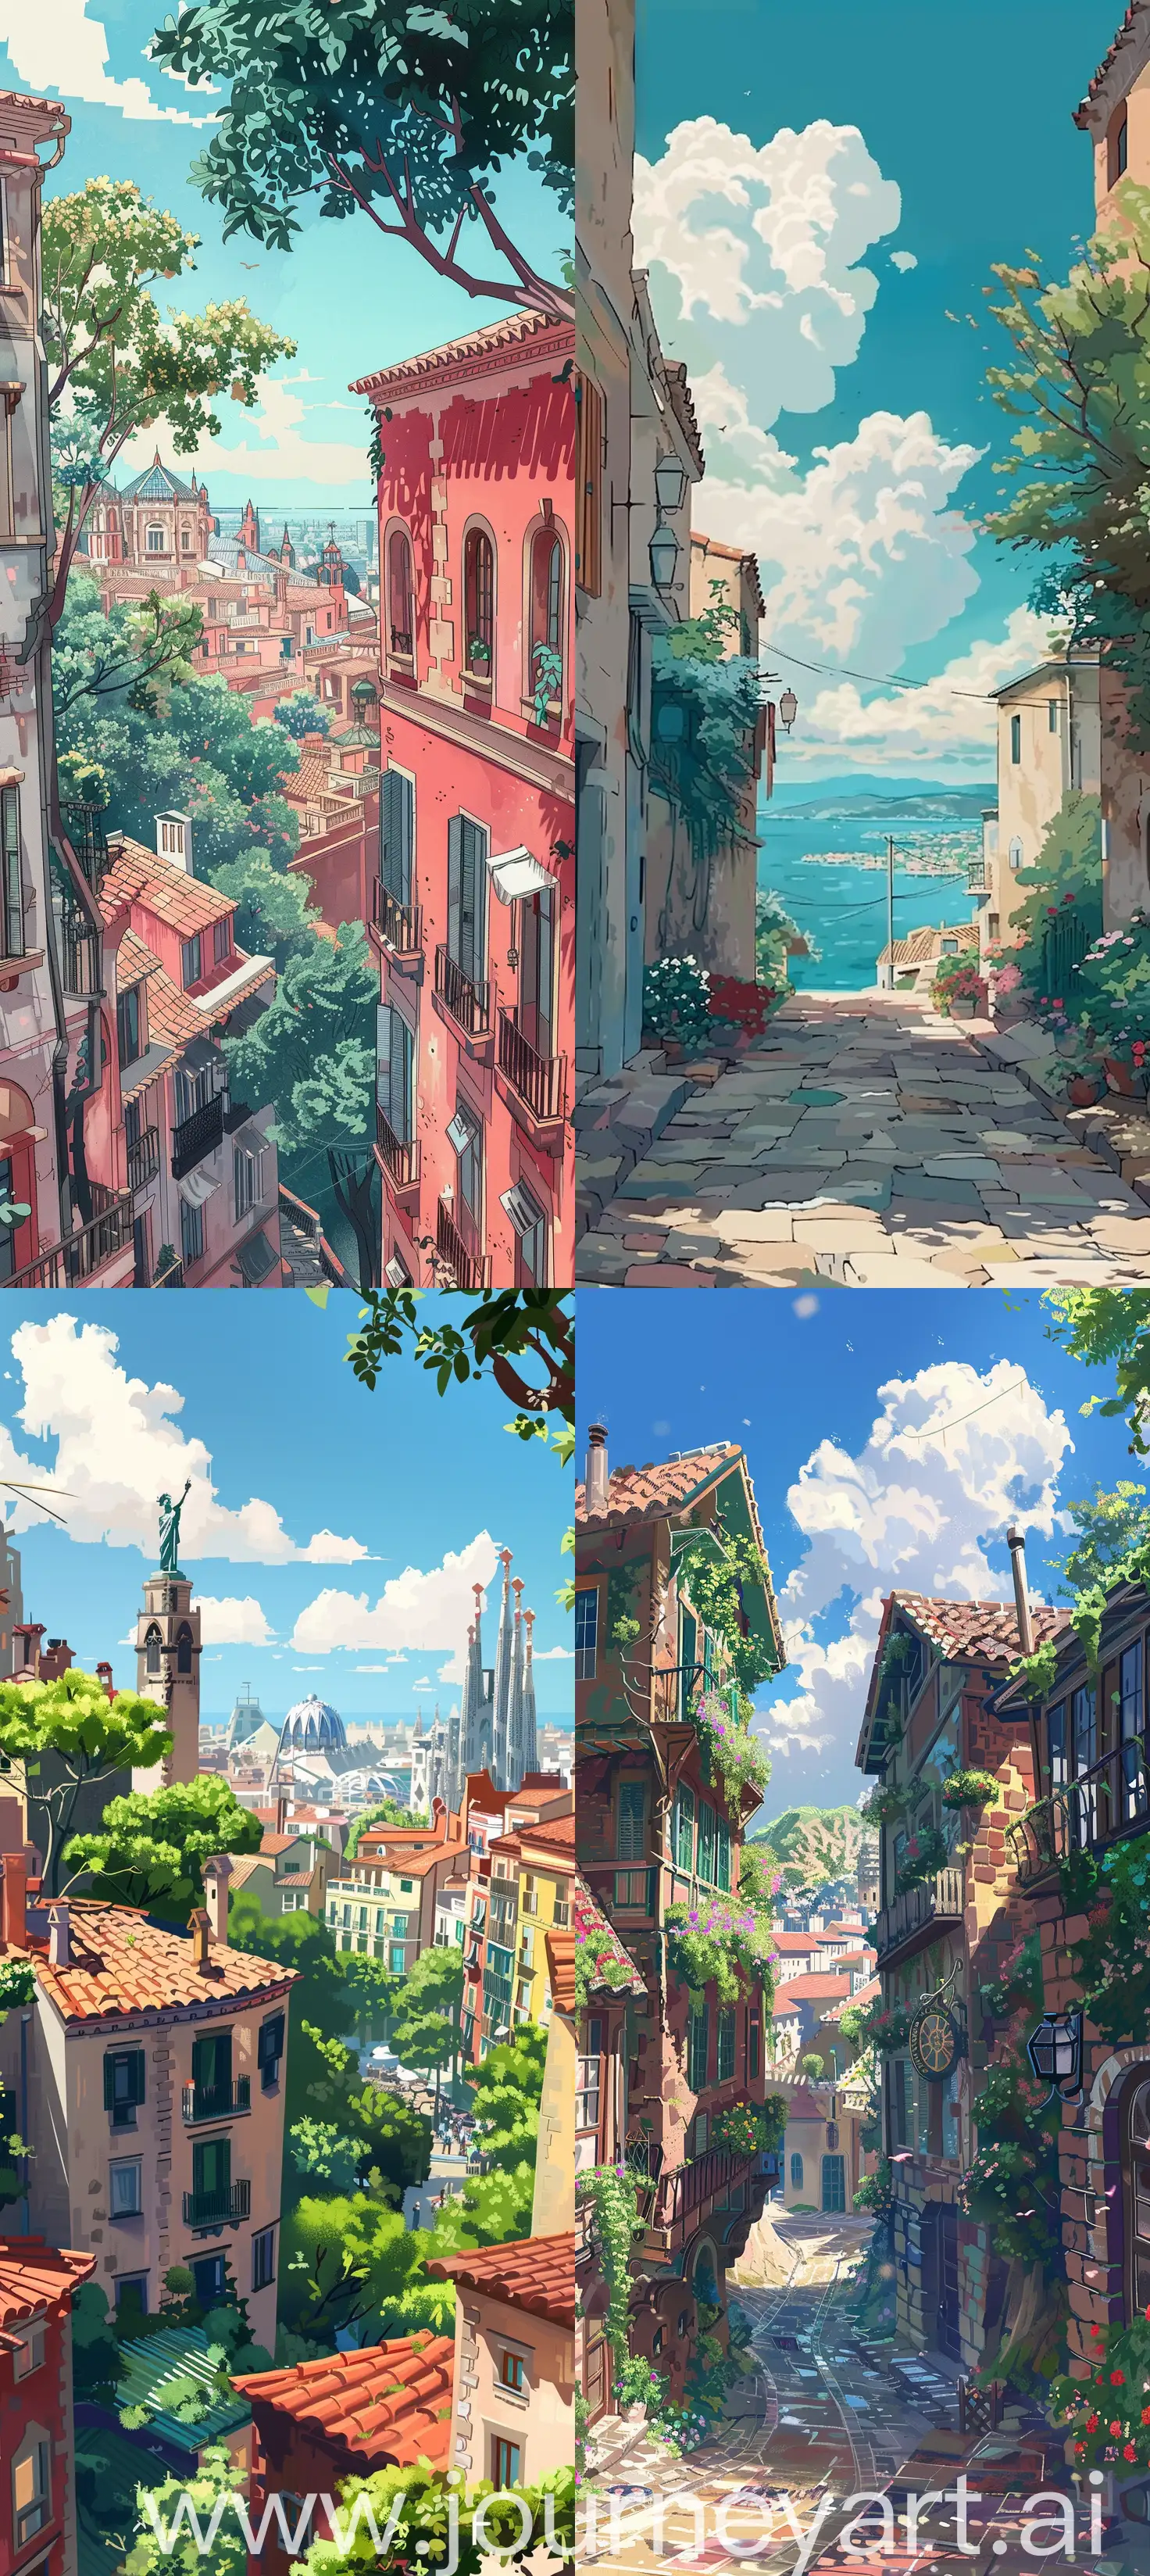 Enchanting-Studio-Ghibli-Style-Barcelona-Landscape-Adventure